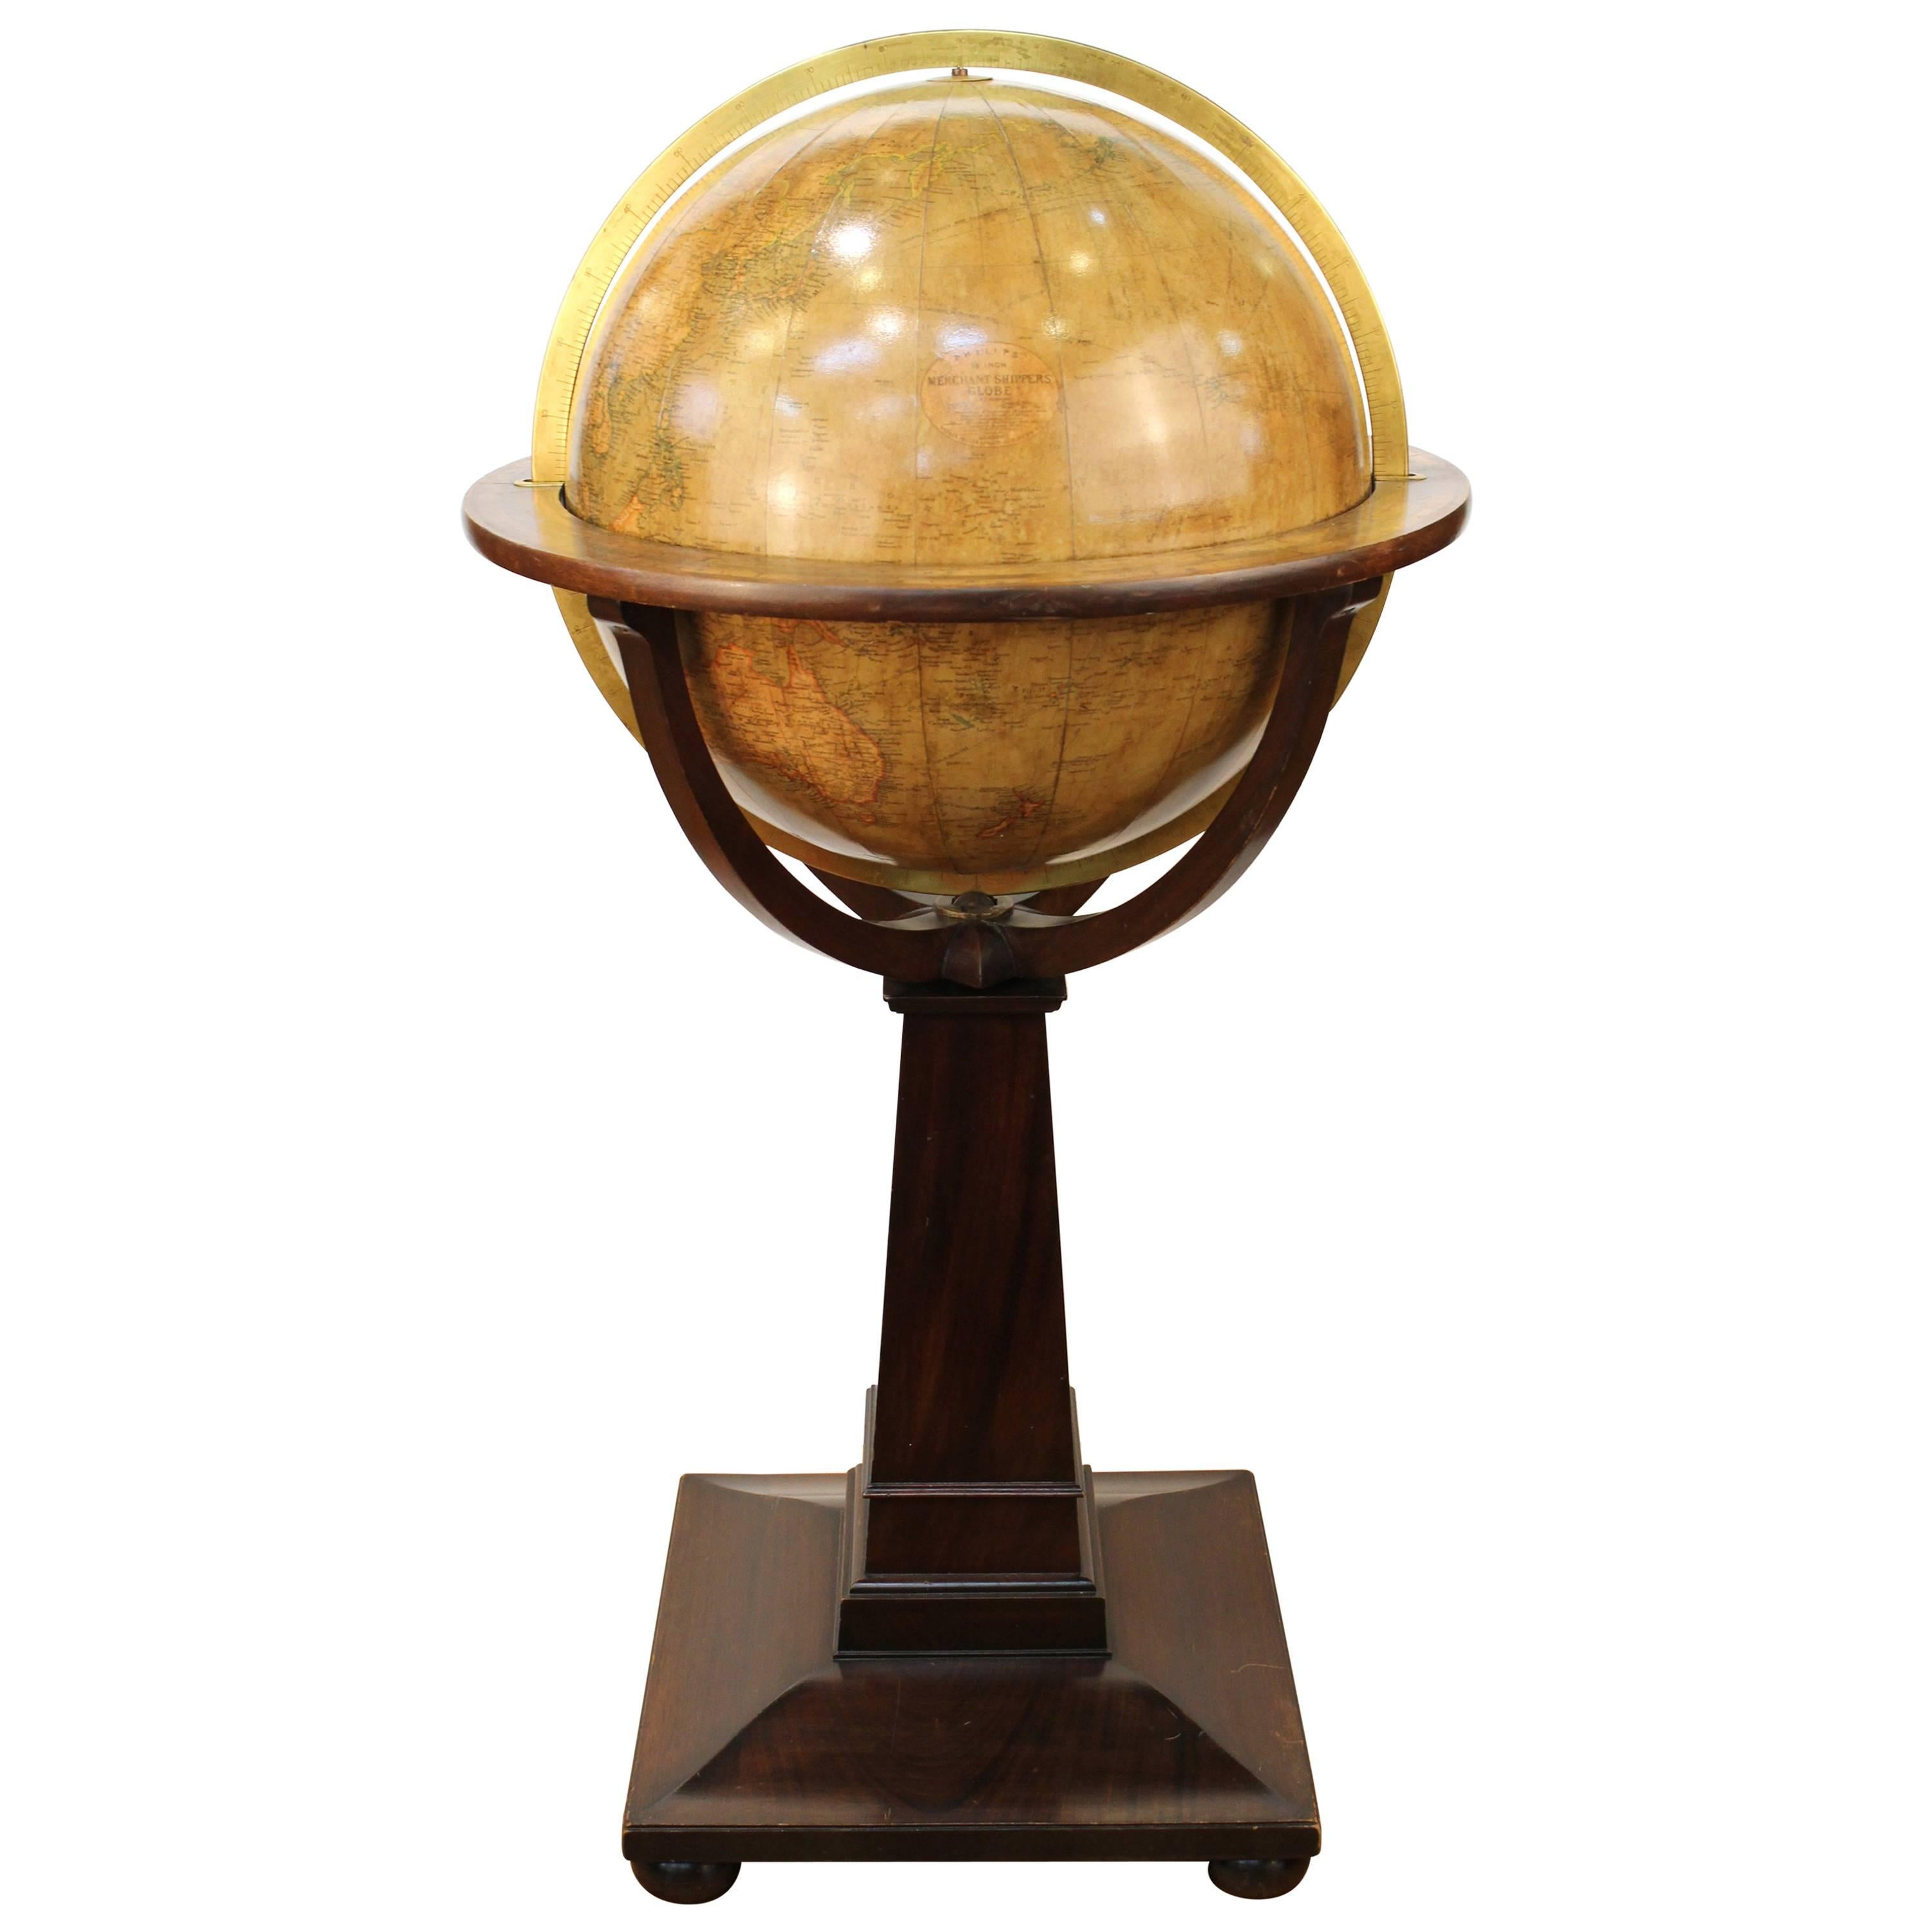 Antique Philip's Merchant Shipper's Globe